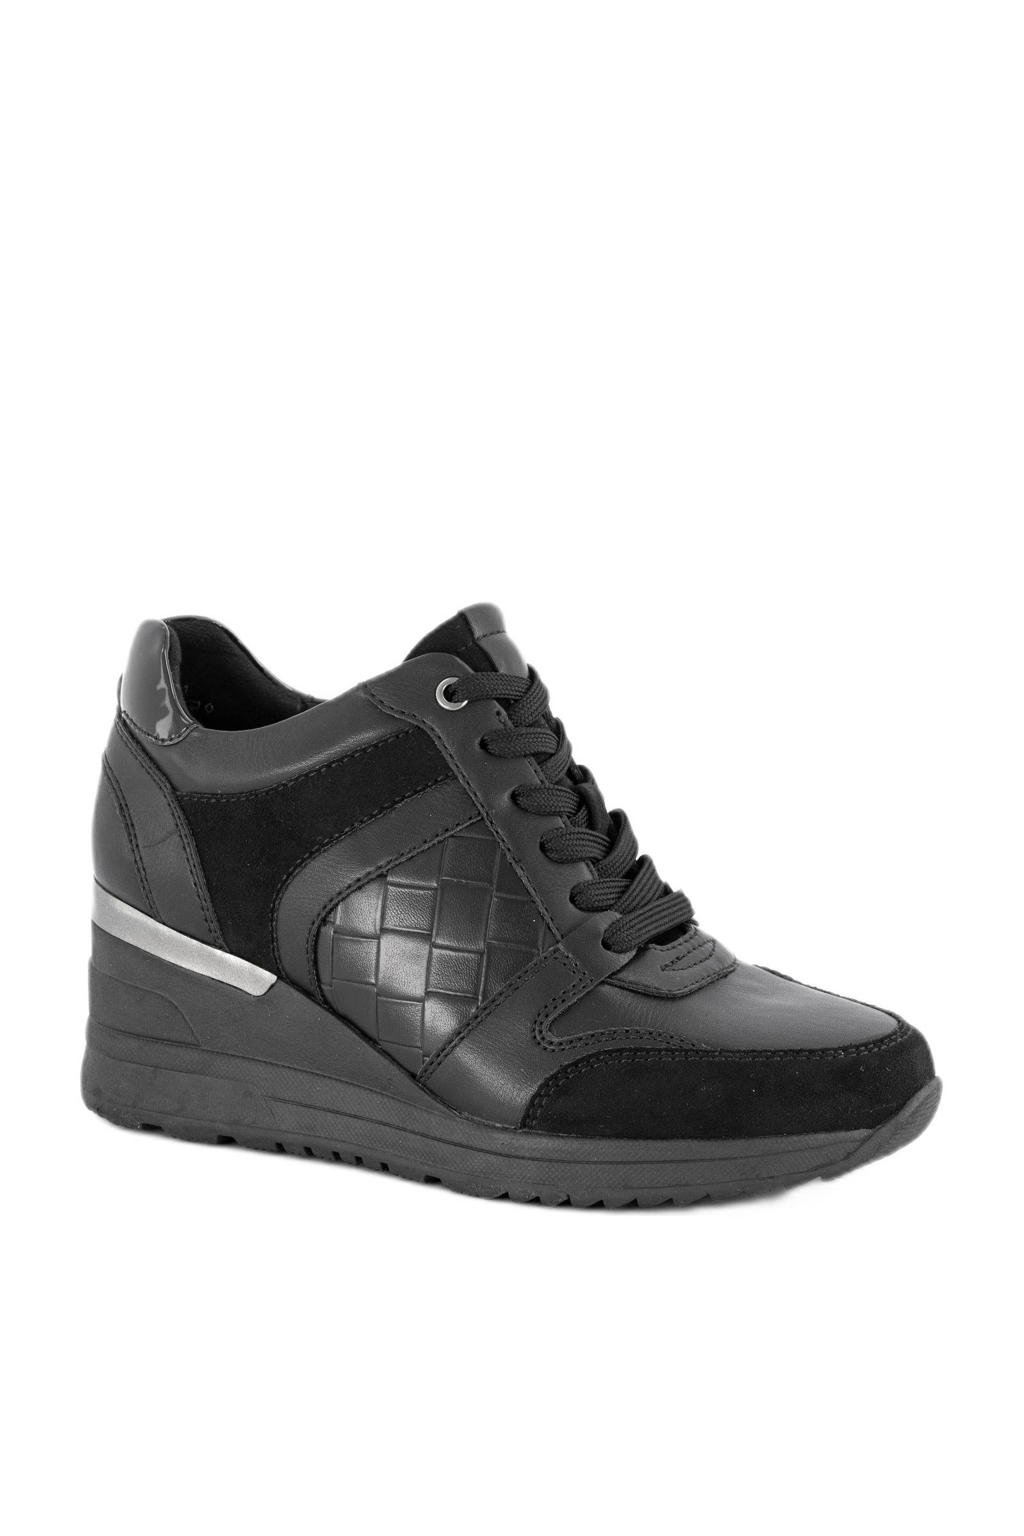 Graceland   wedge sneakers zwart